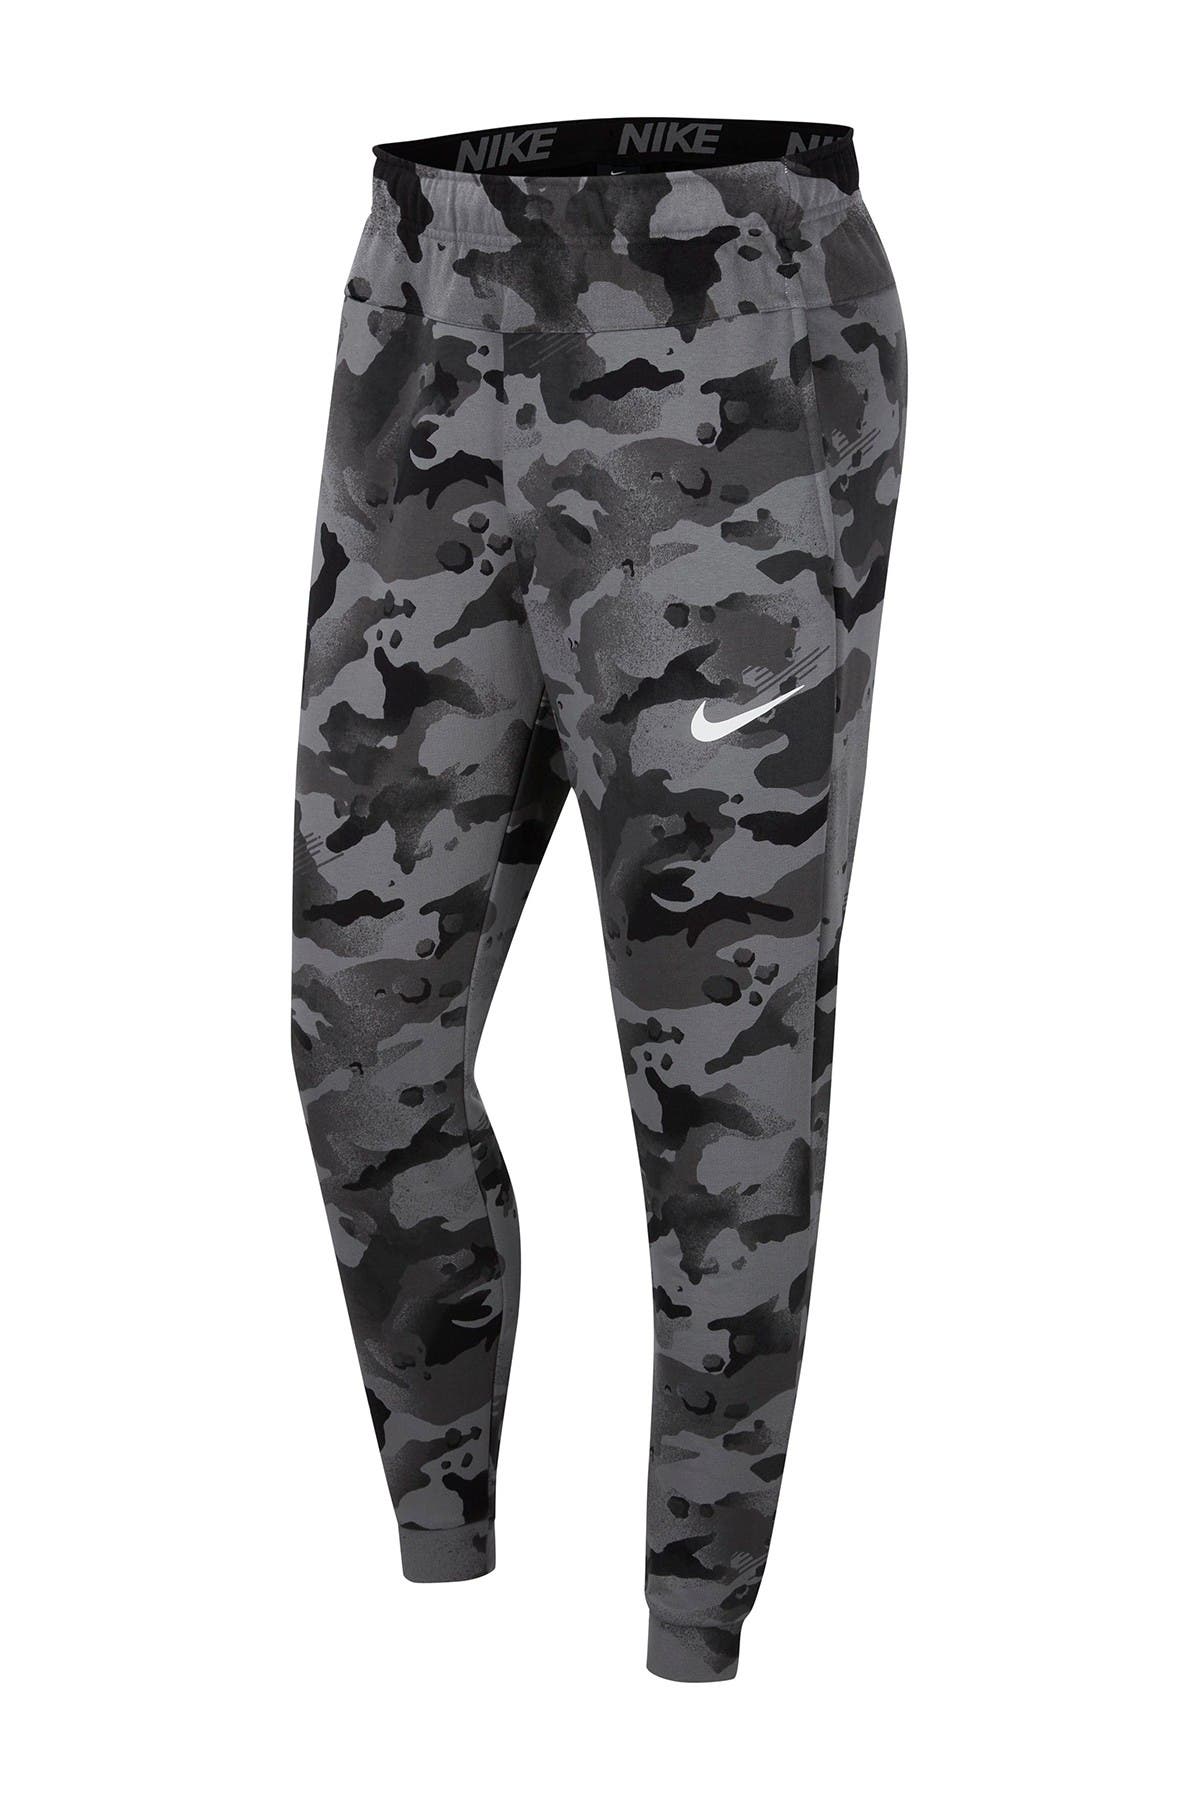 nike camouflage jogger pants